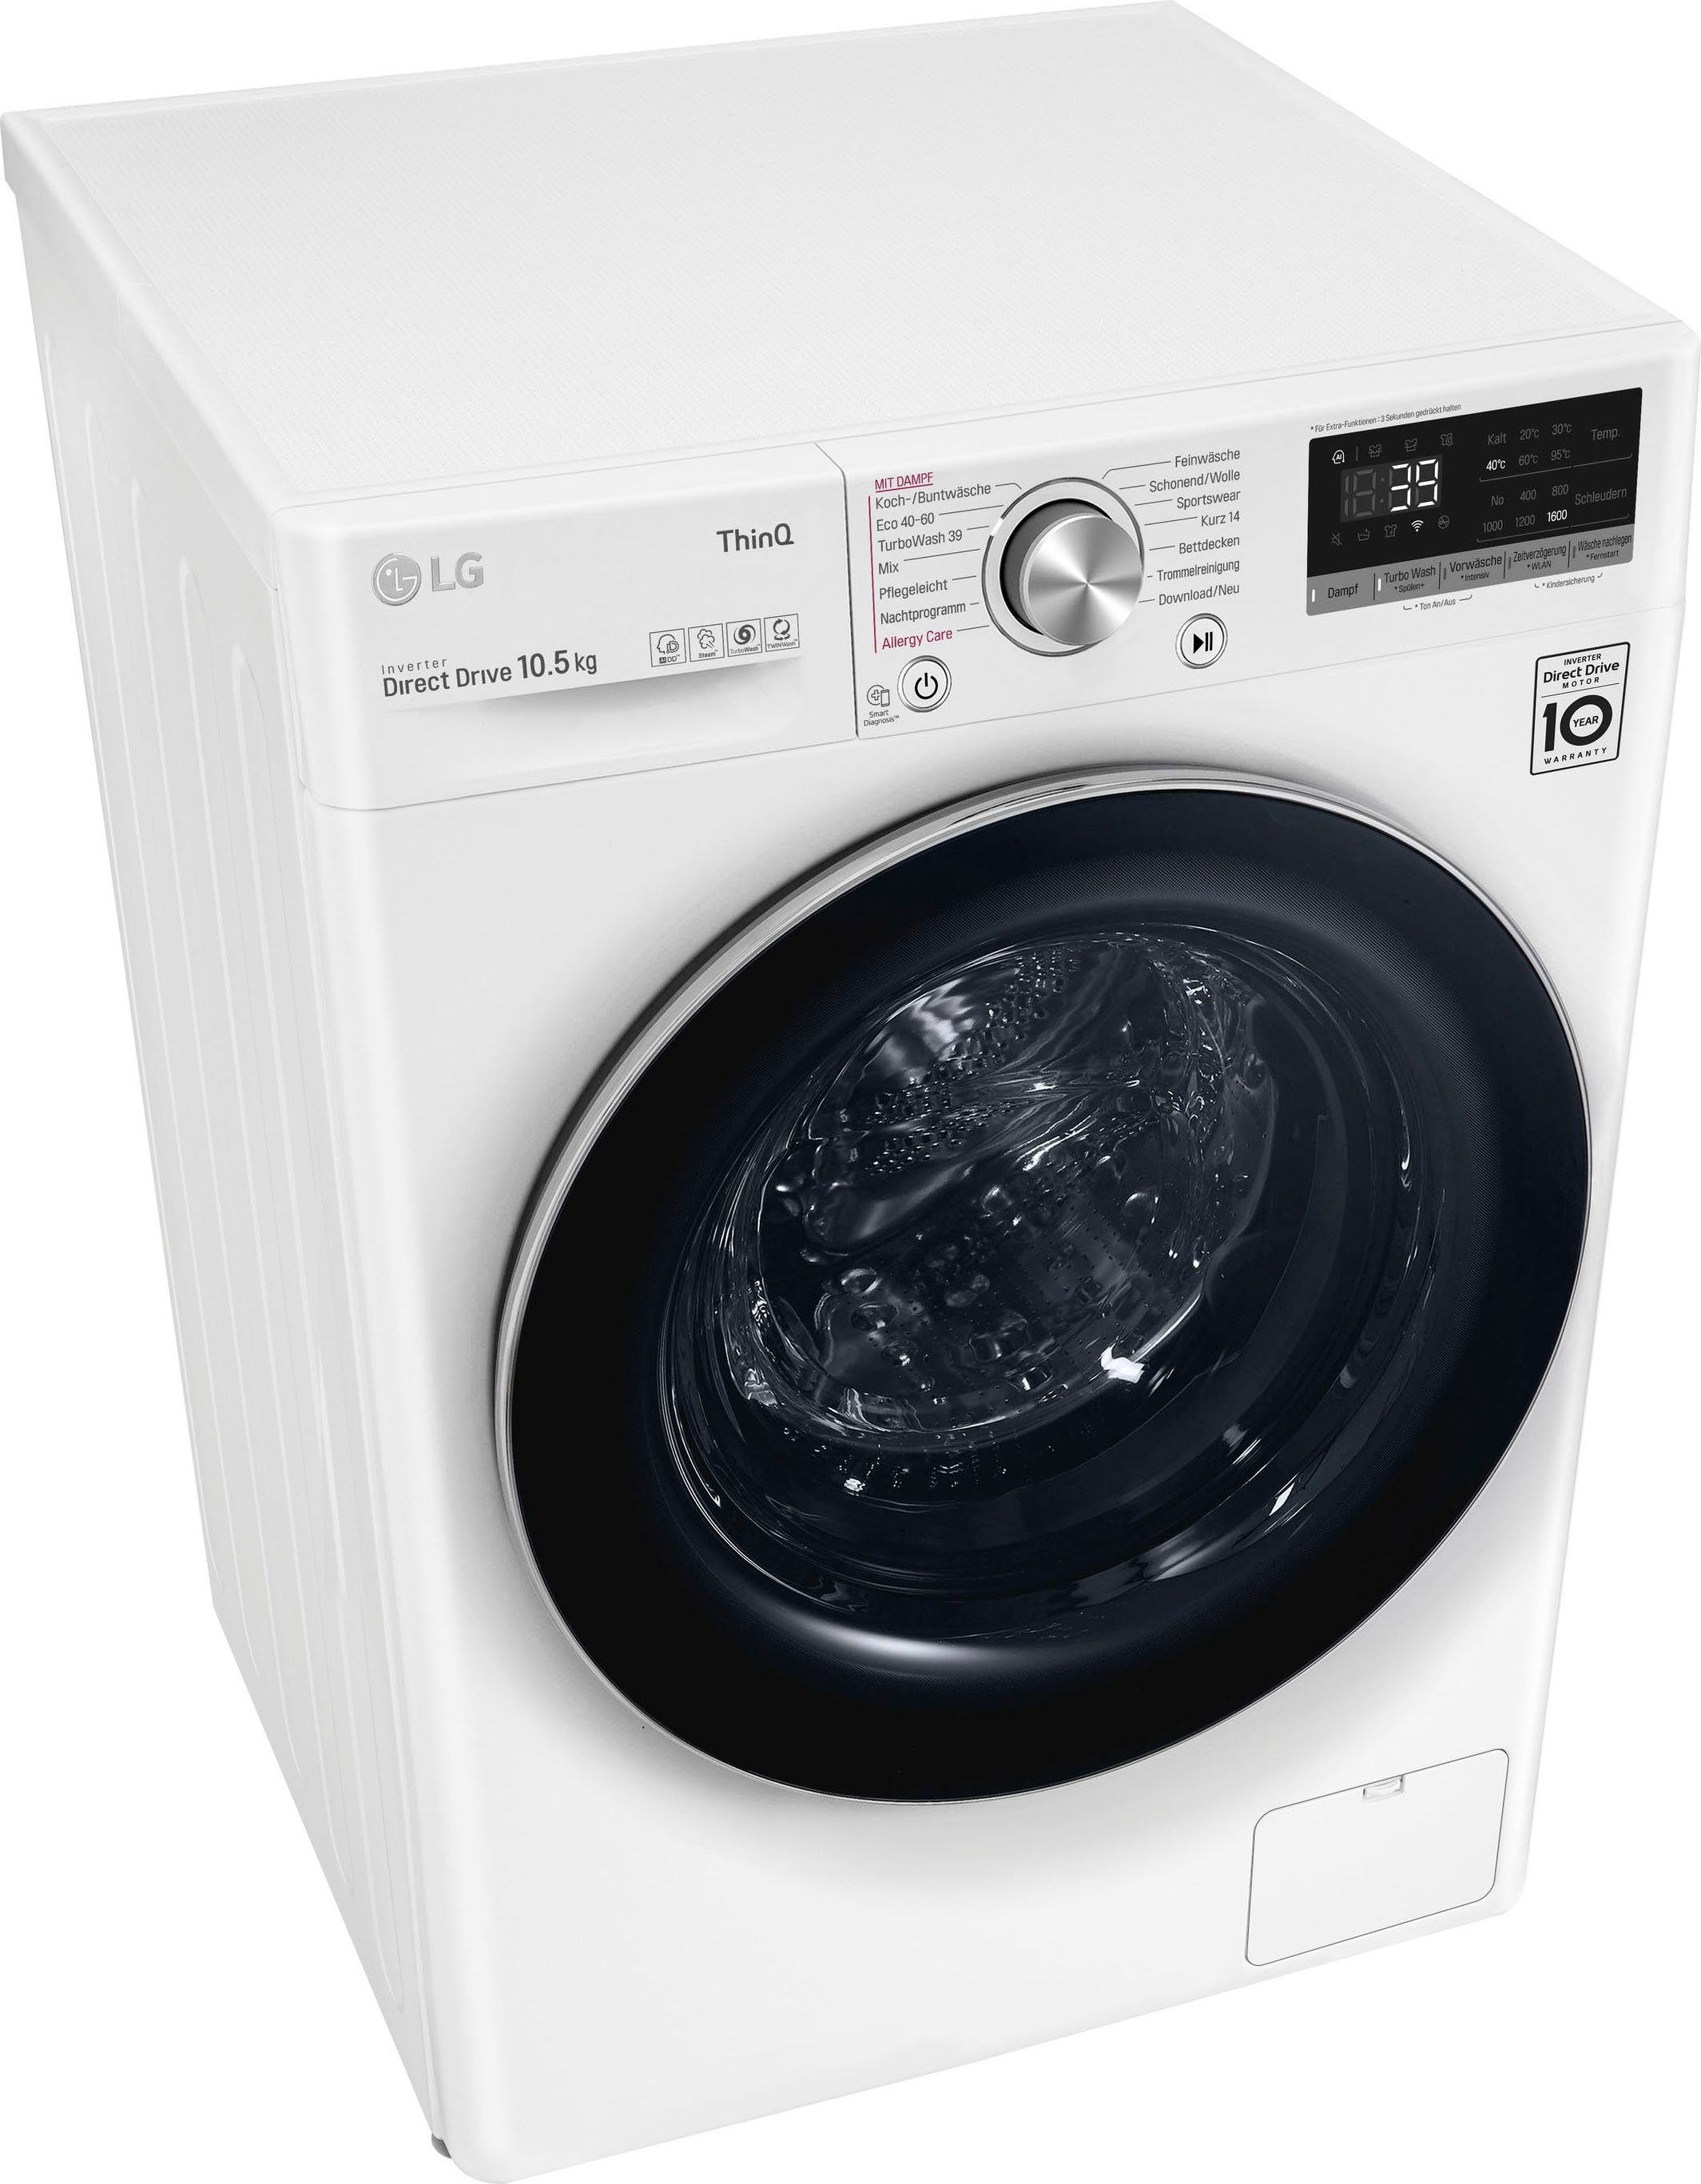 LG 11 kg, U/min Serie 1400 7 F4WR7012, Waschmaschine